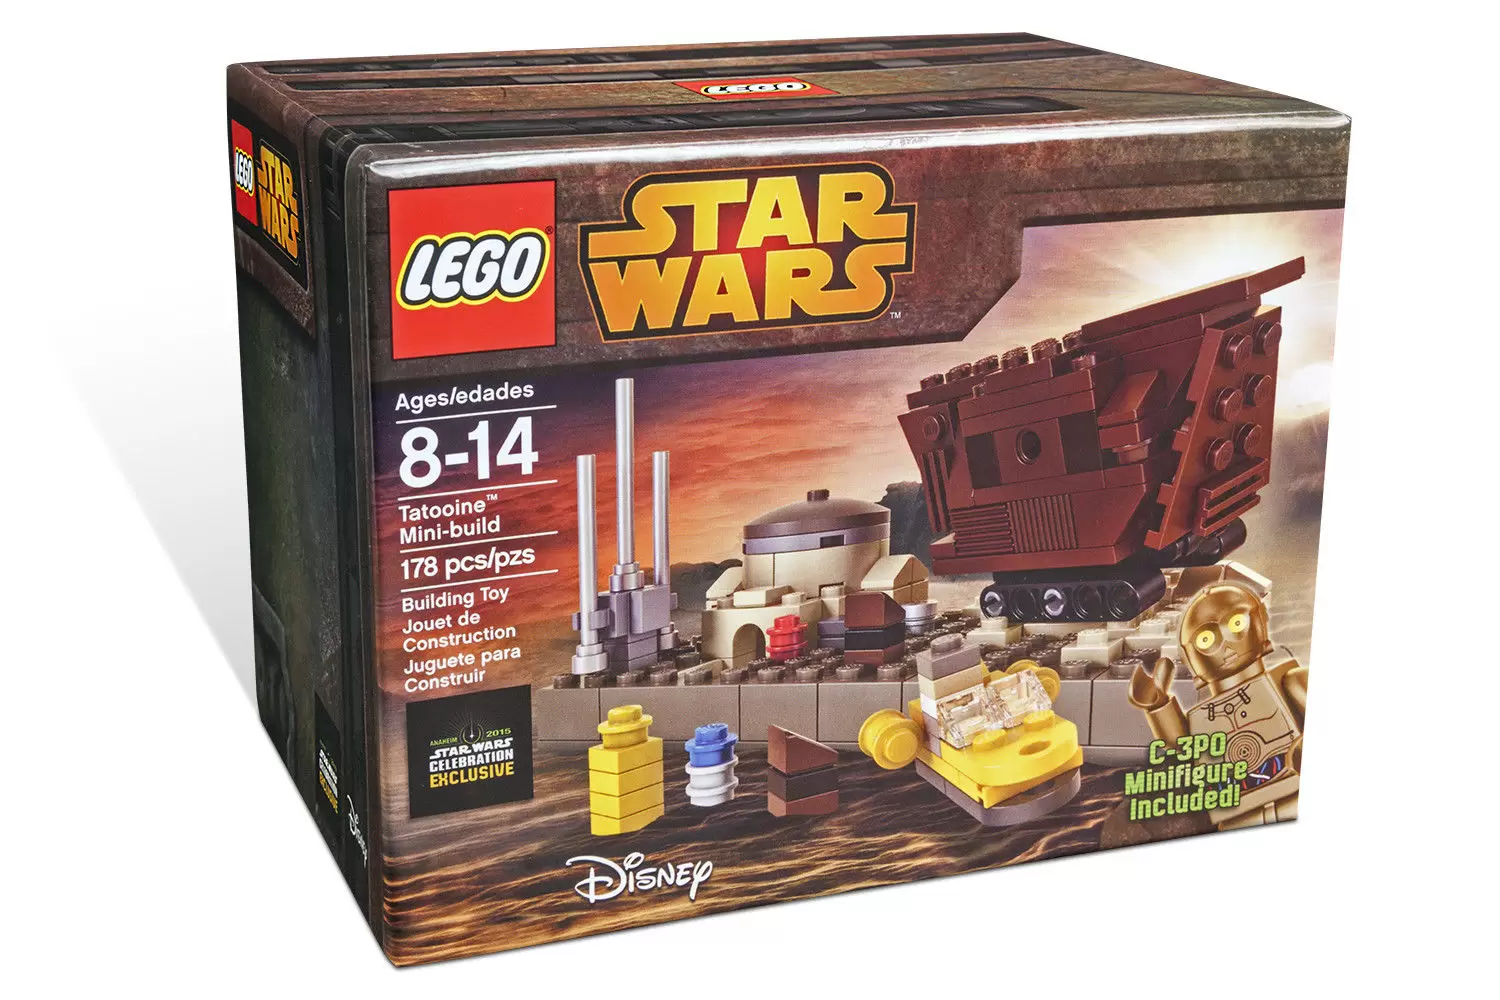 LEGO Star Wars - Tatooine Mini-build (Star Wars Celebration 2015)